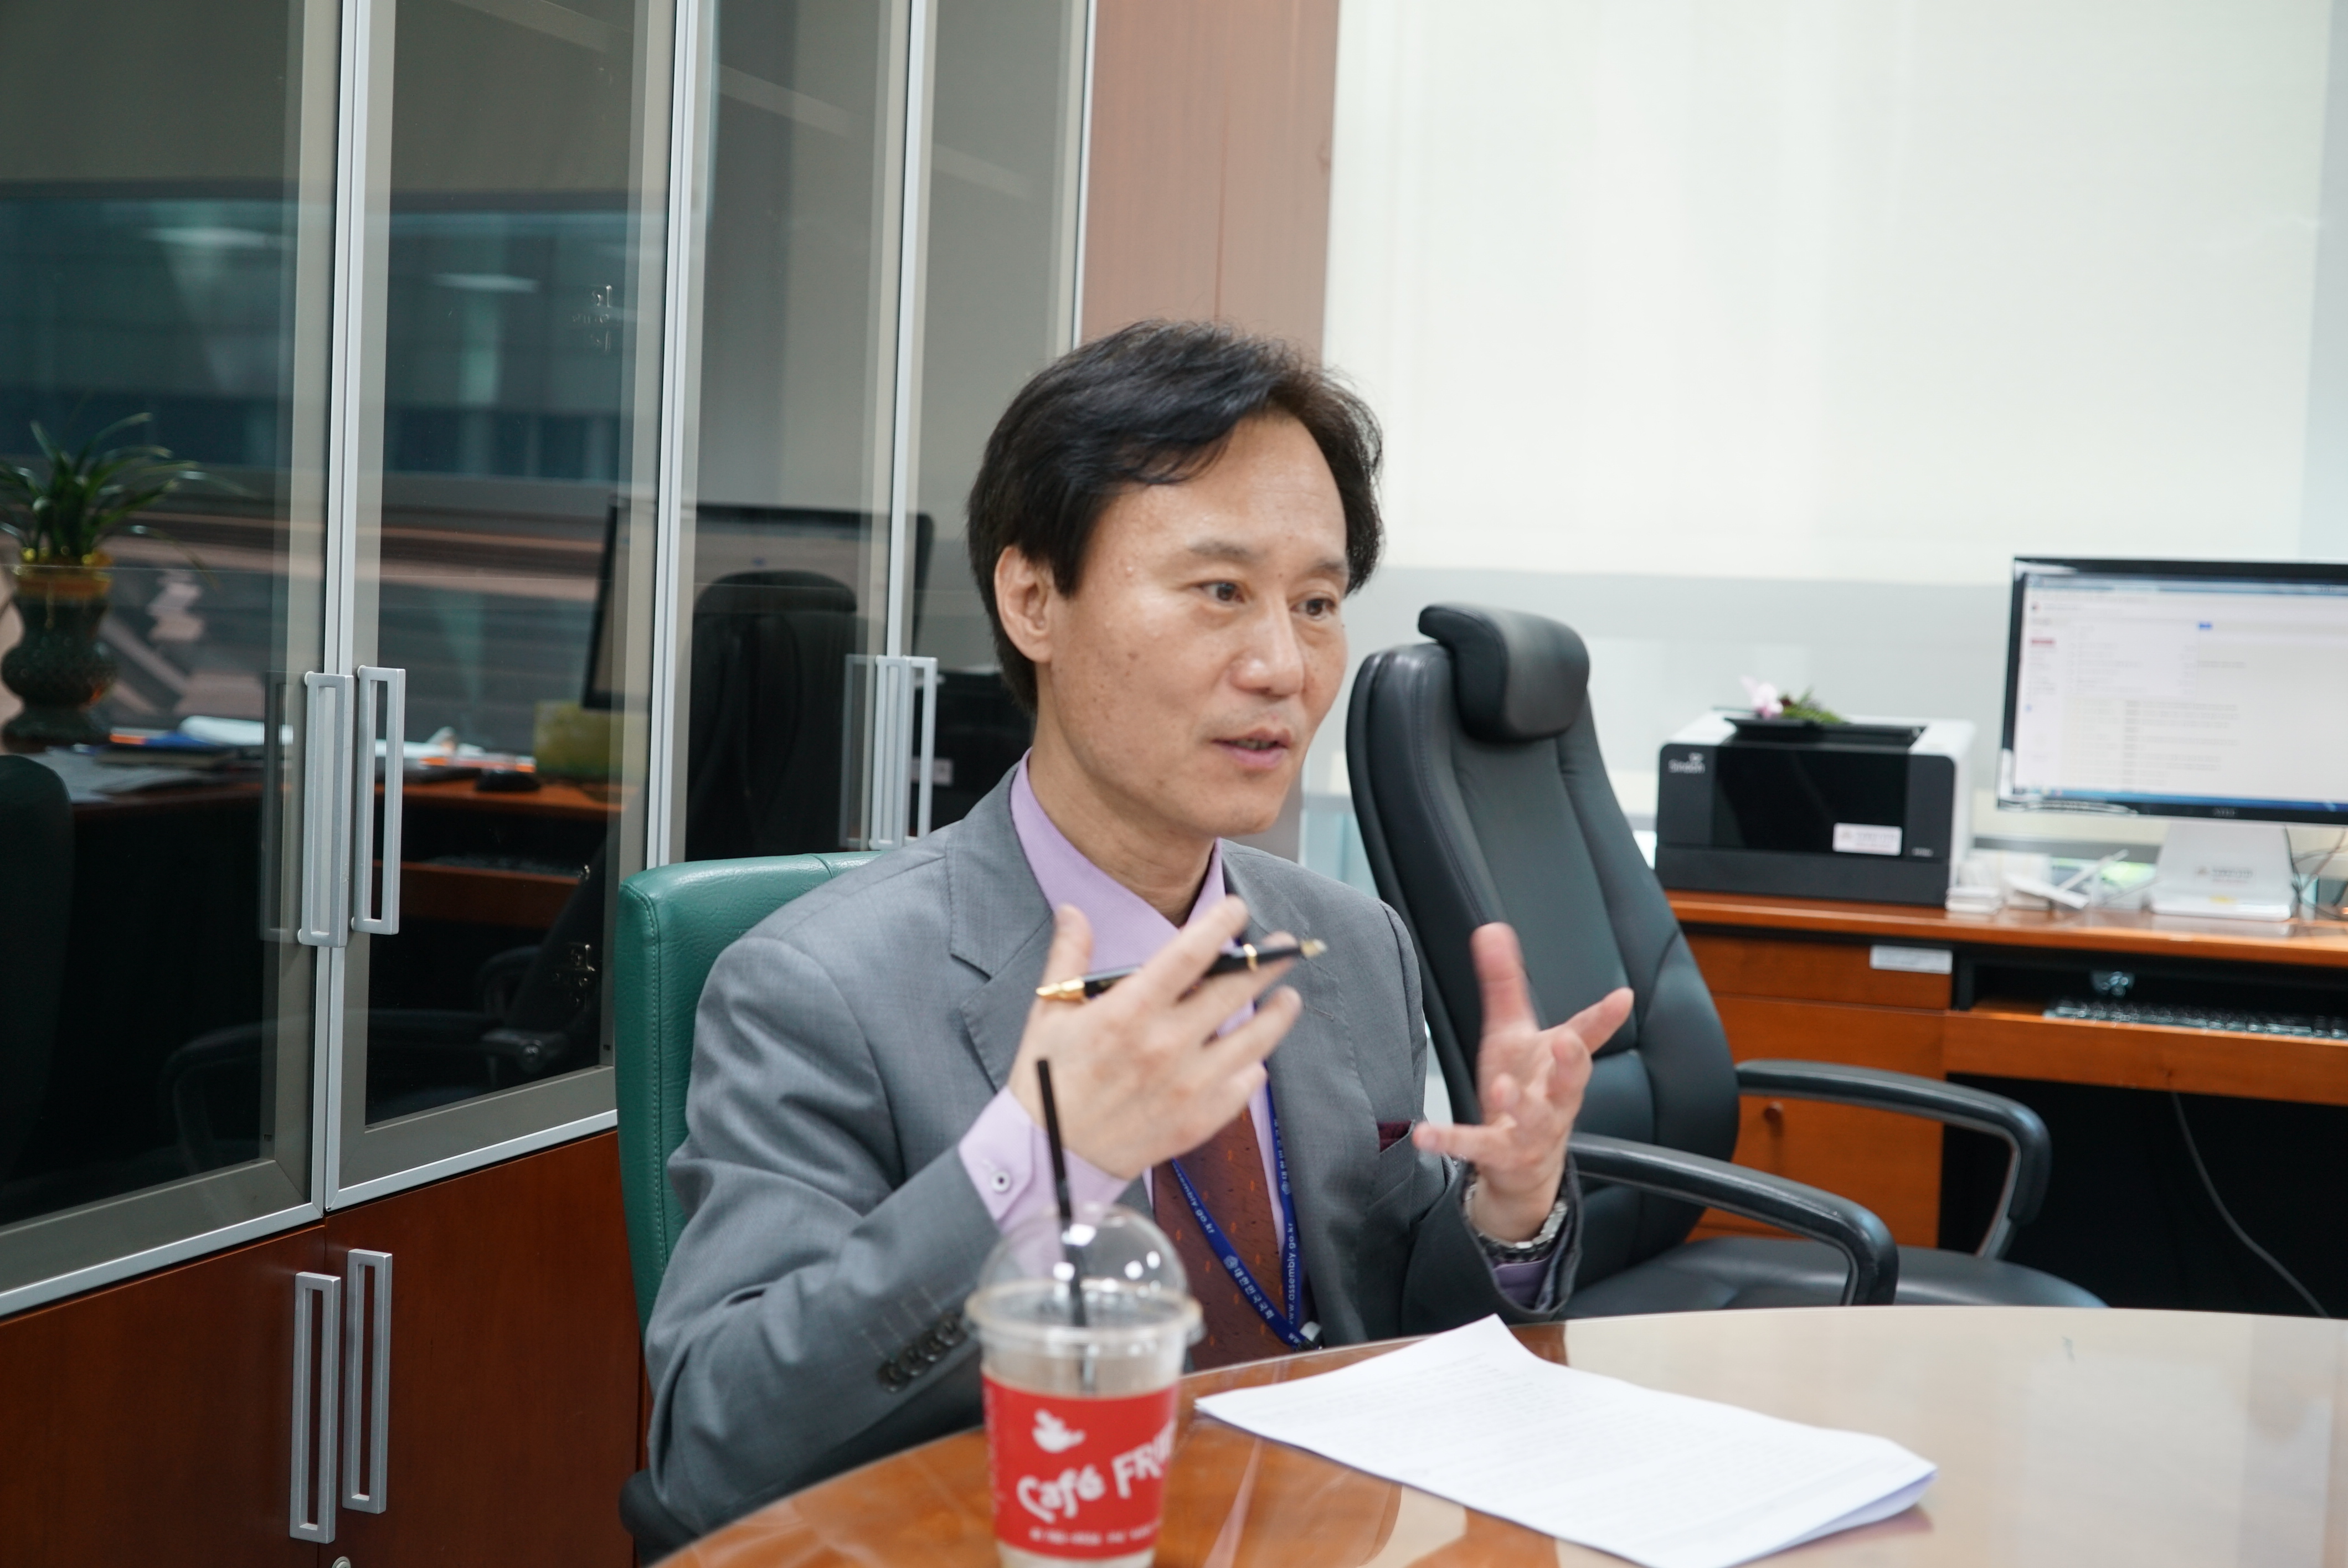 [Teaching@KDIS] Professor Jin Park